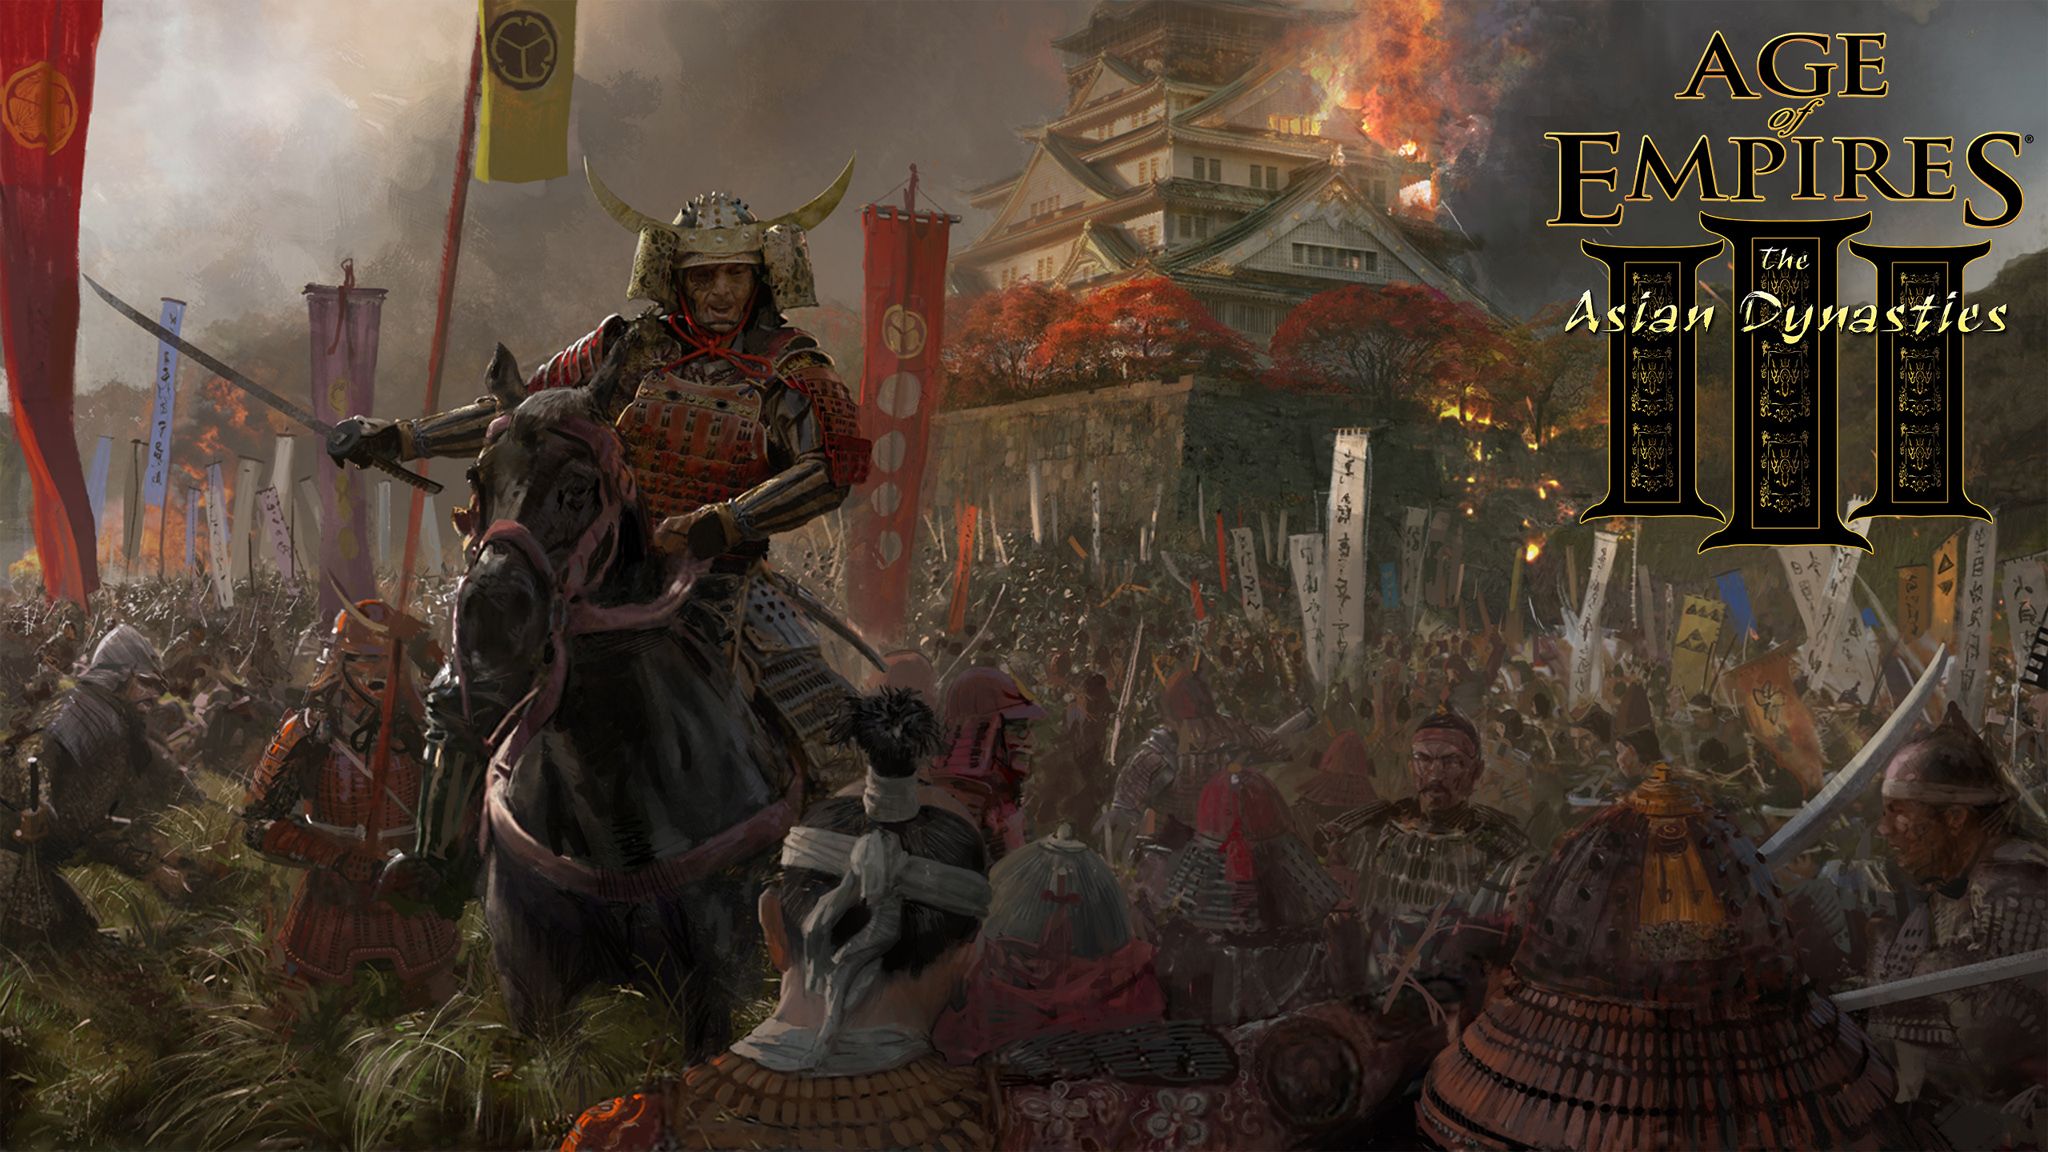 Age of japan. Age of Empires III the Asian Dynasties. Age of Empires Япония. Самурай Империя японская Империя. Арт Империя Японии Самураи.